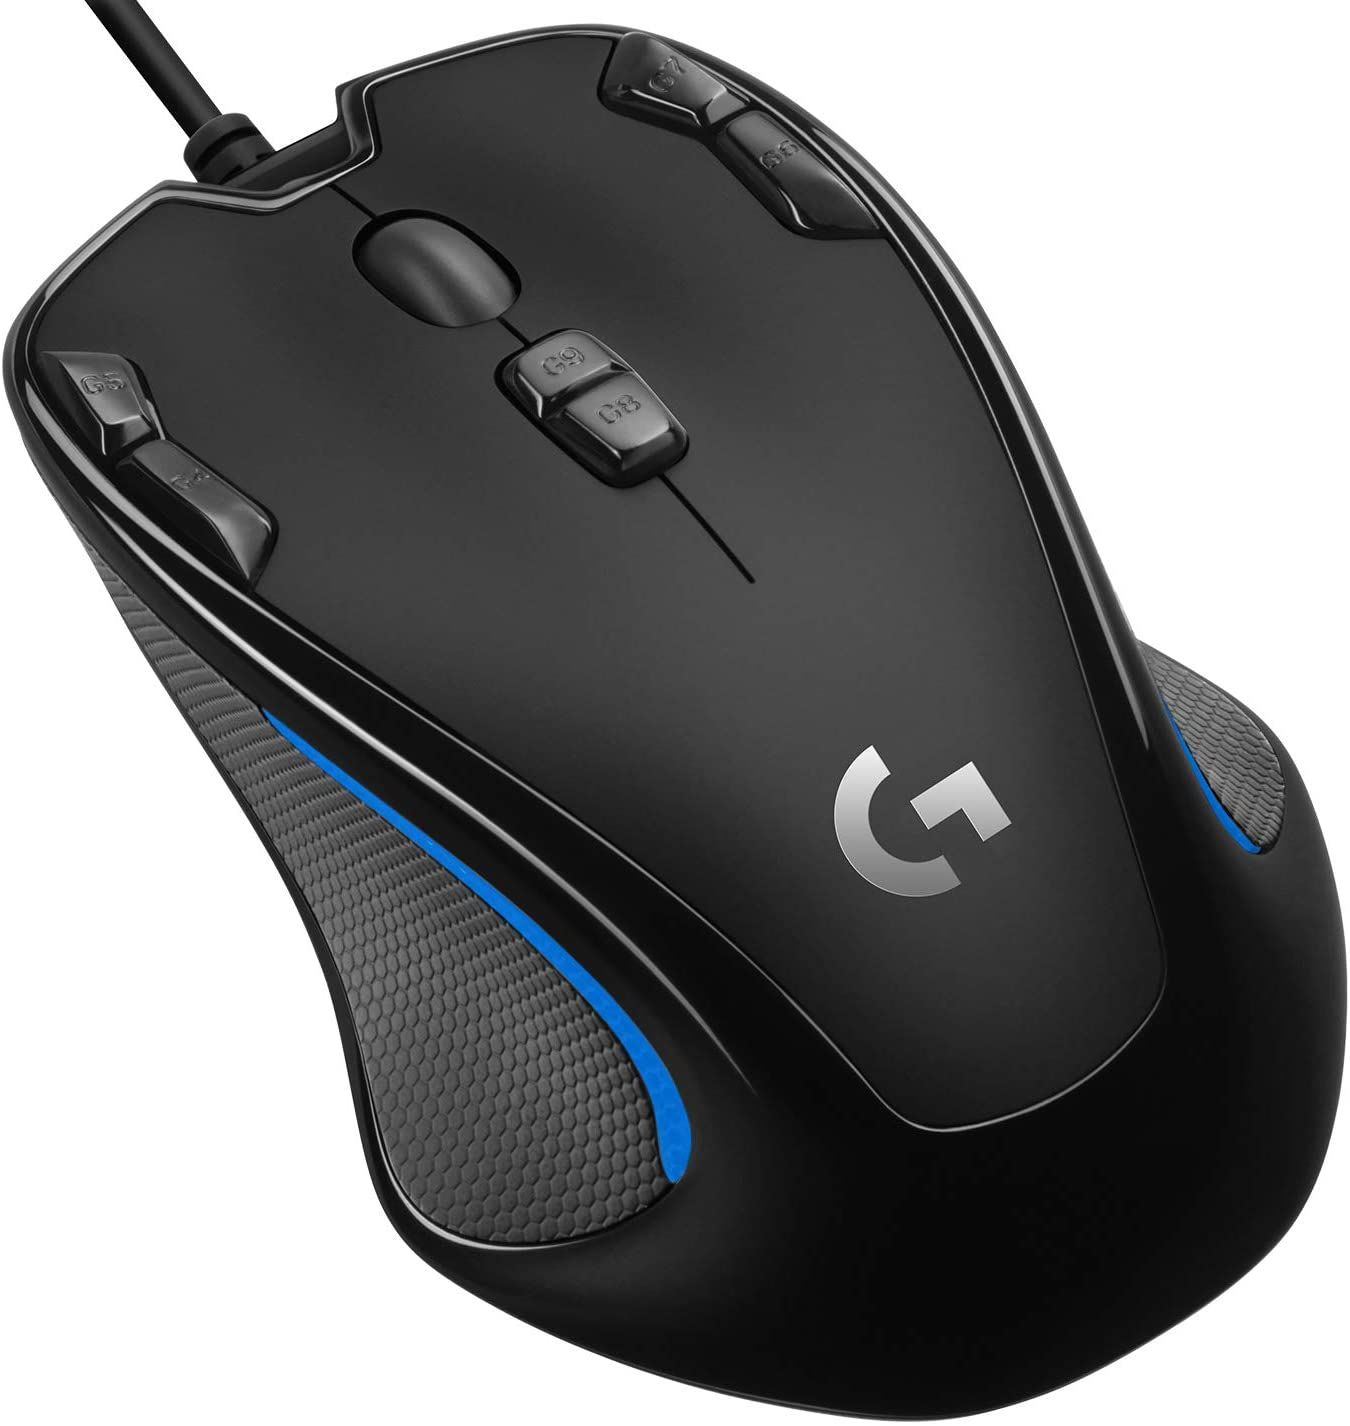 Logitech G300s Optical Ambidextrous Gaming Mouse grip